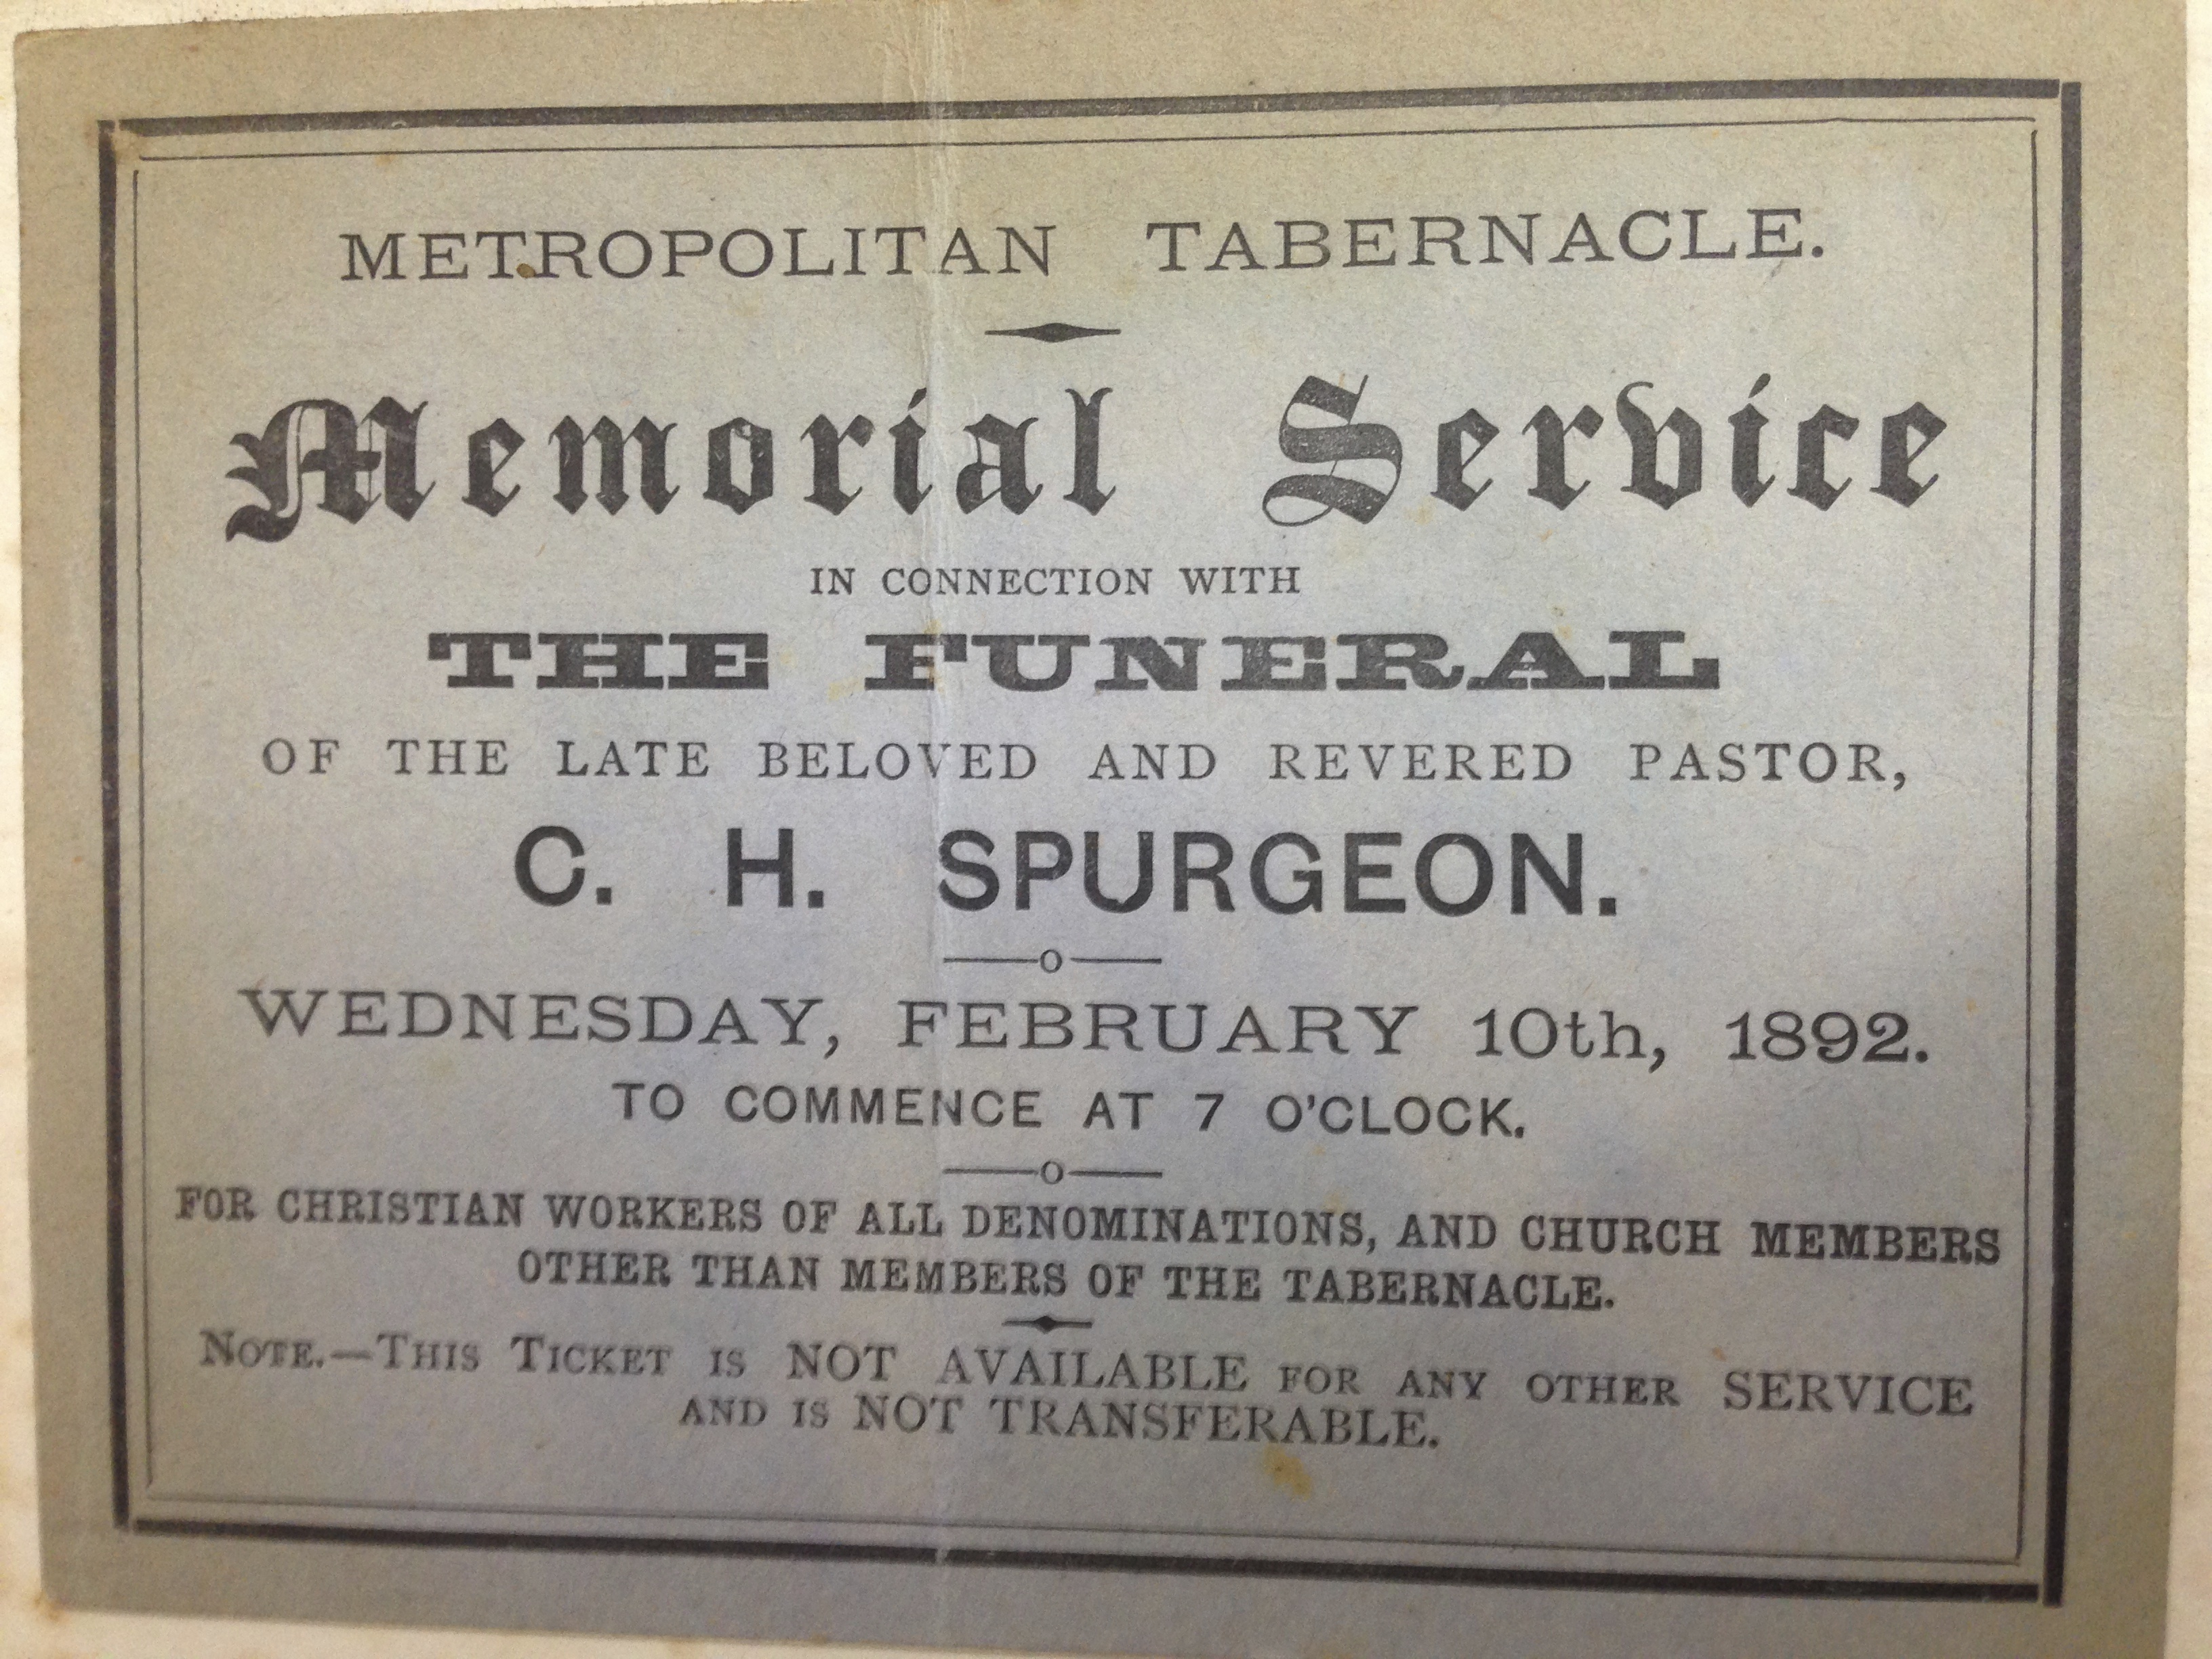 Charles Hadden Spurgeon's Funeral notice